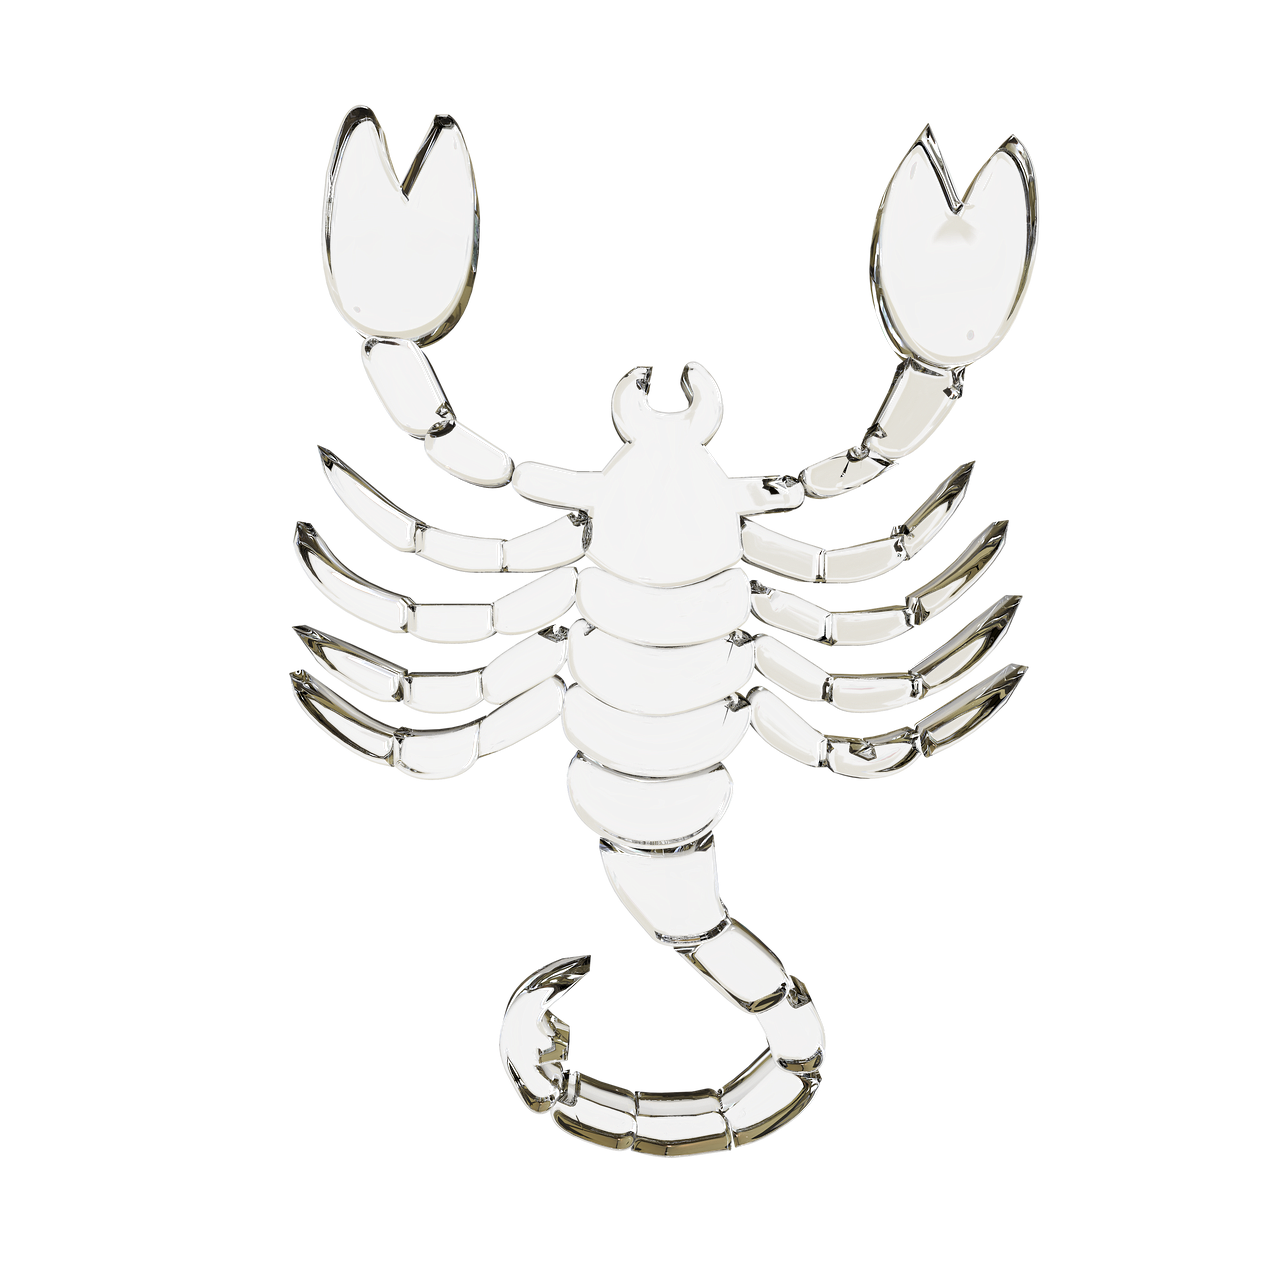 glass signs of the zodiac scorpion horoscope free photo